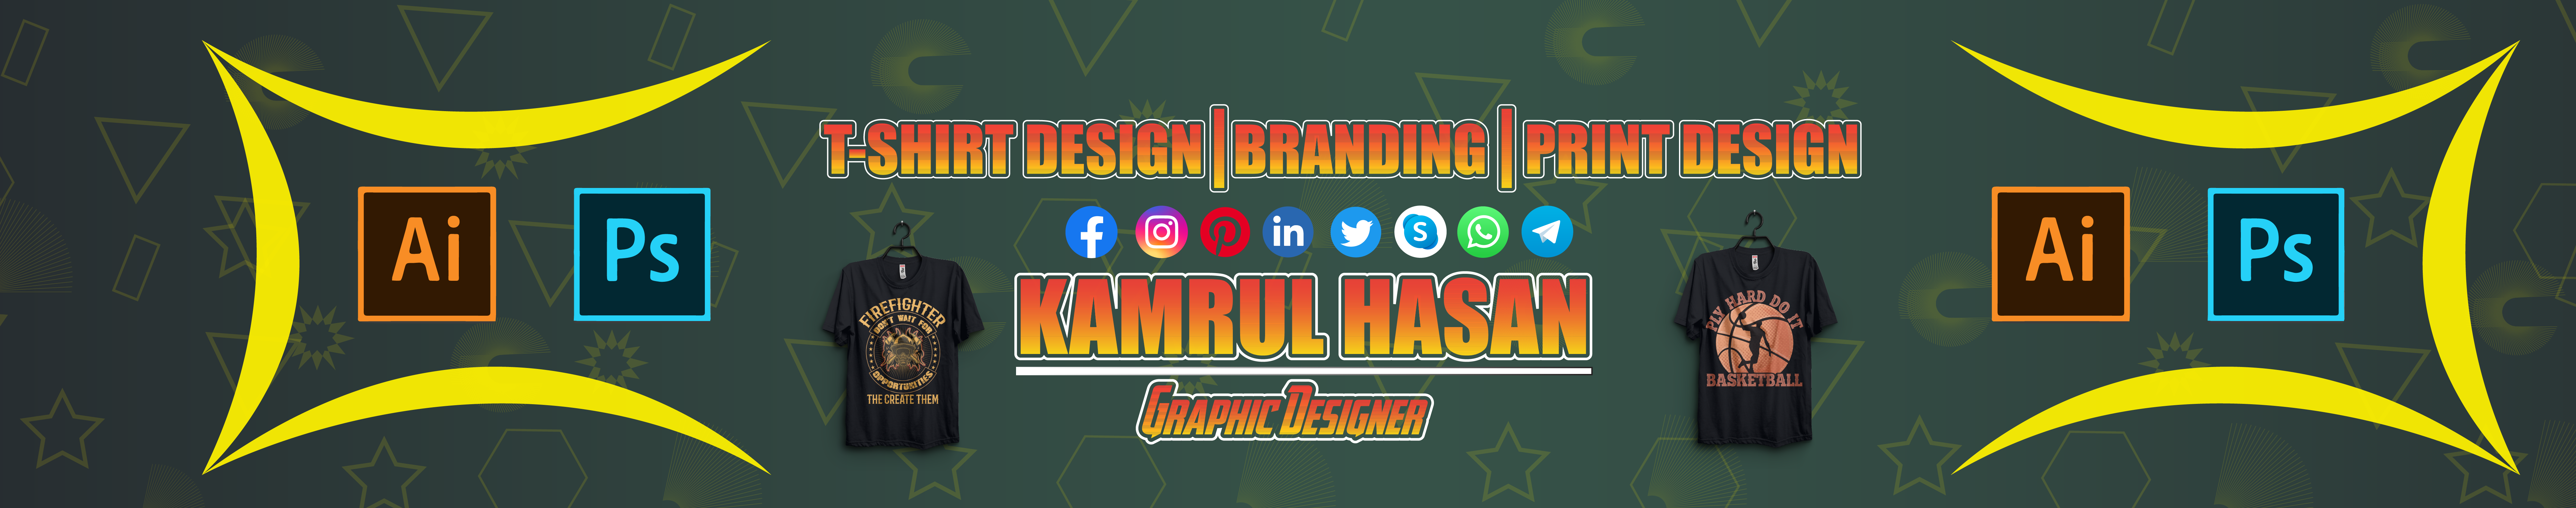 Profielbanner van Kamrul Hasan